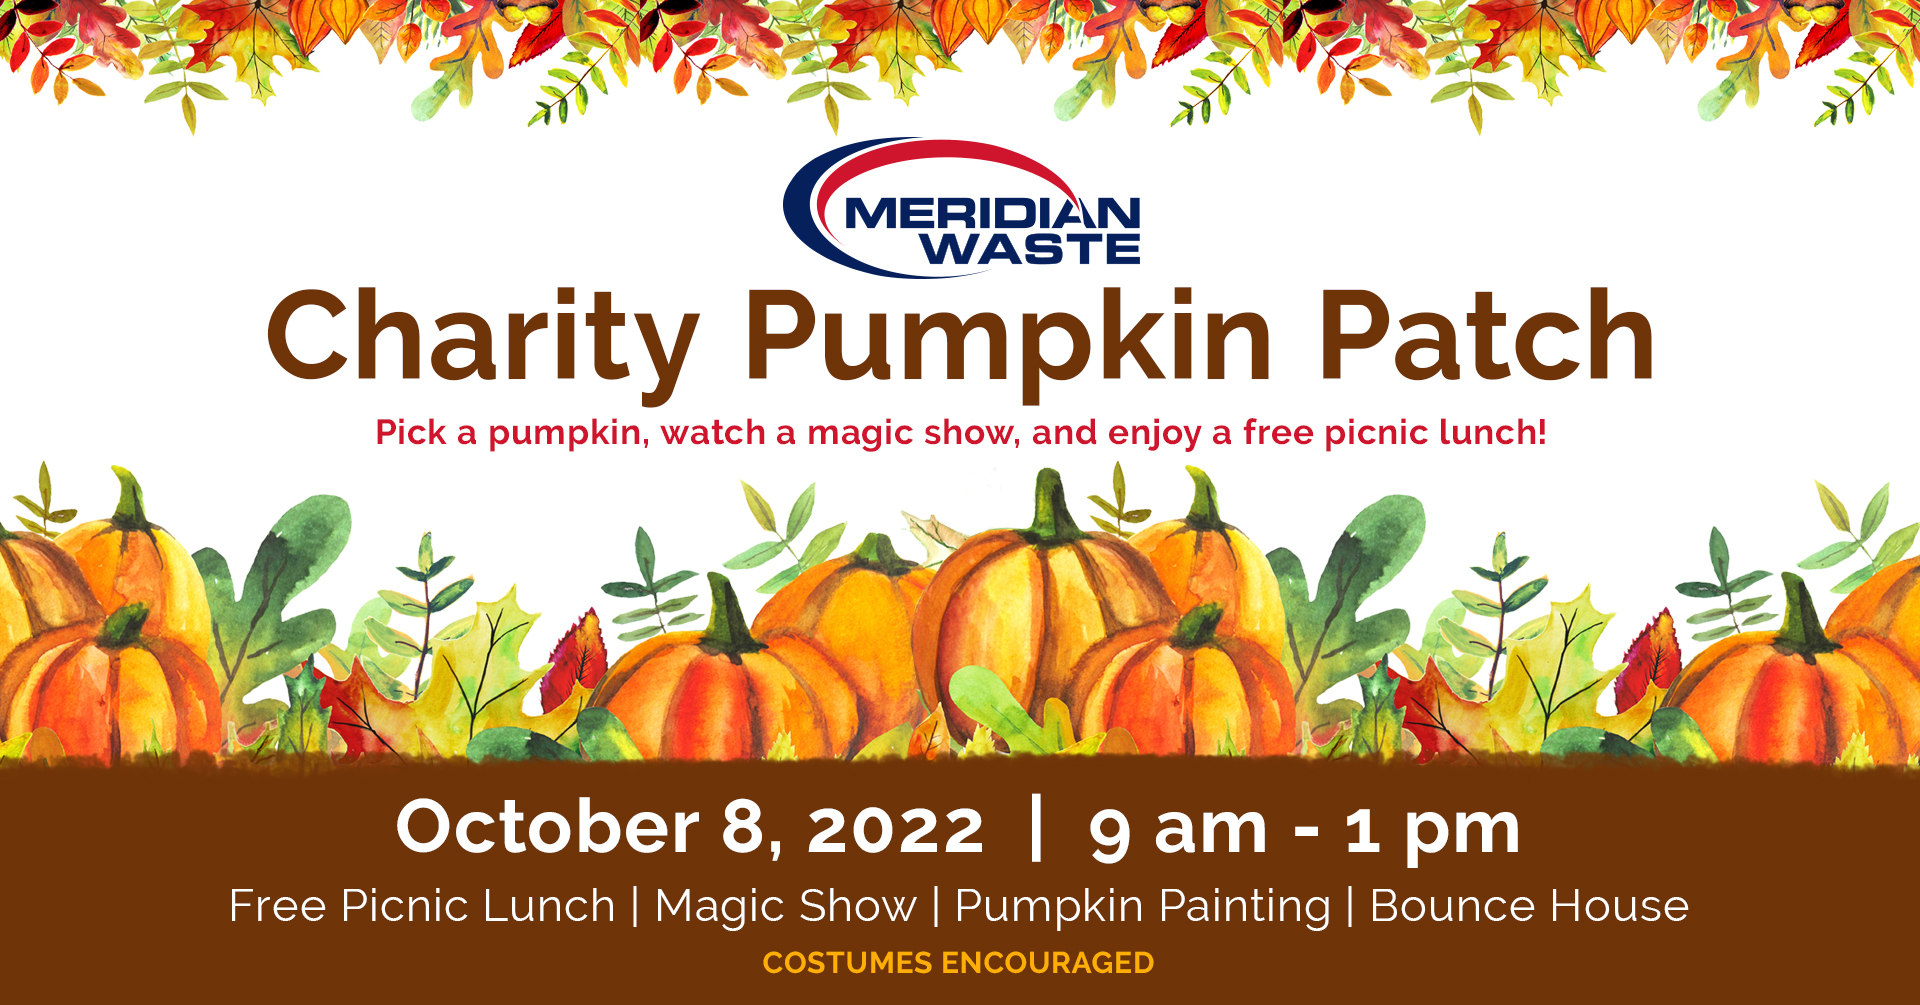 Meridian Waste Charity Pumpkin Patch Oct. 8, 2022